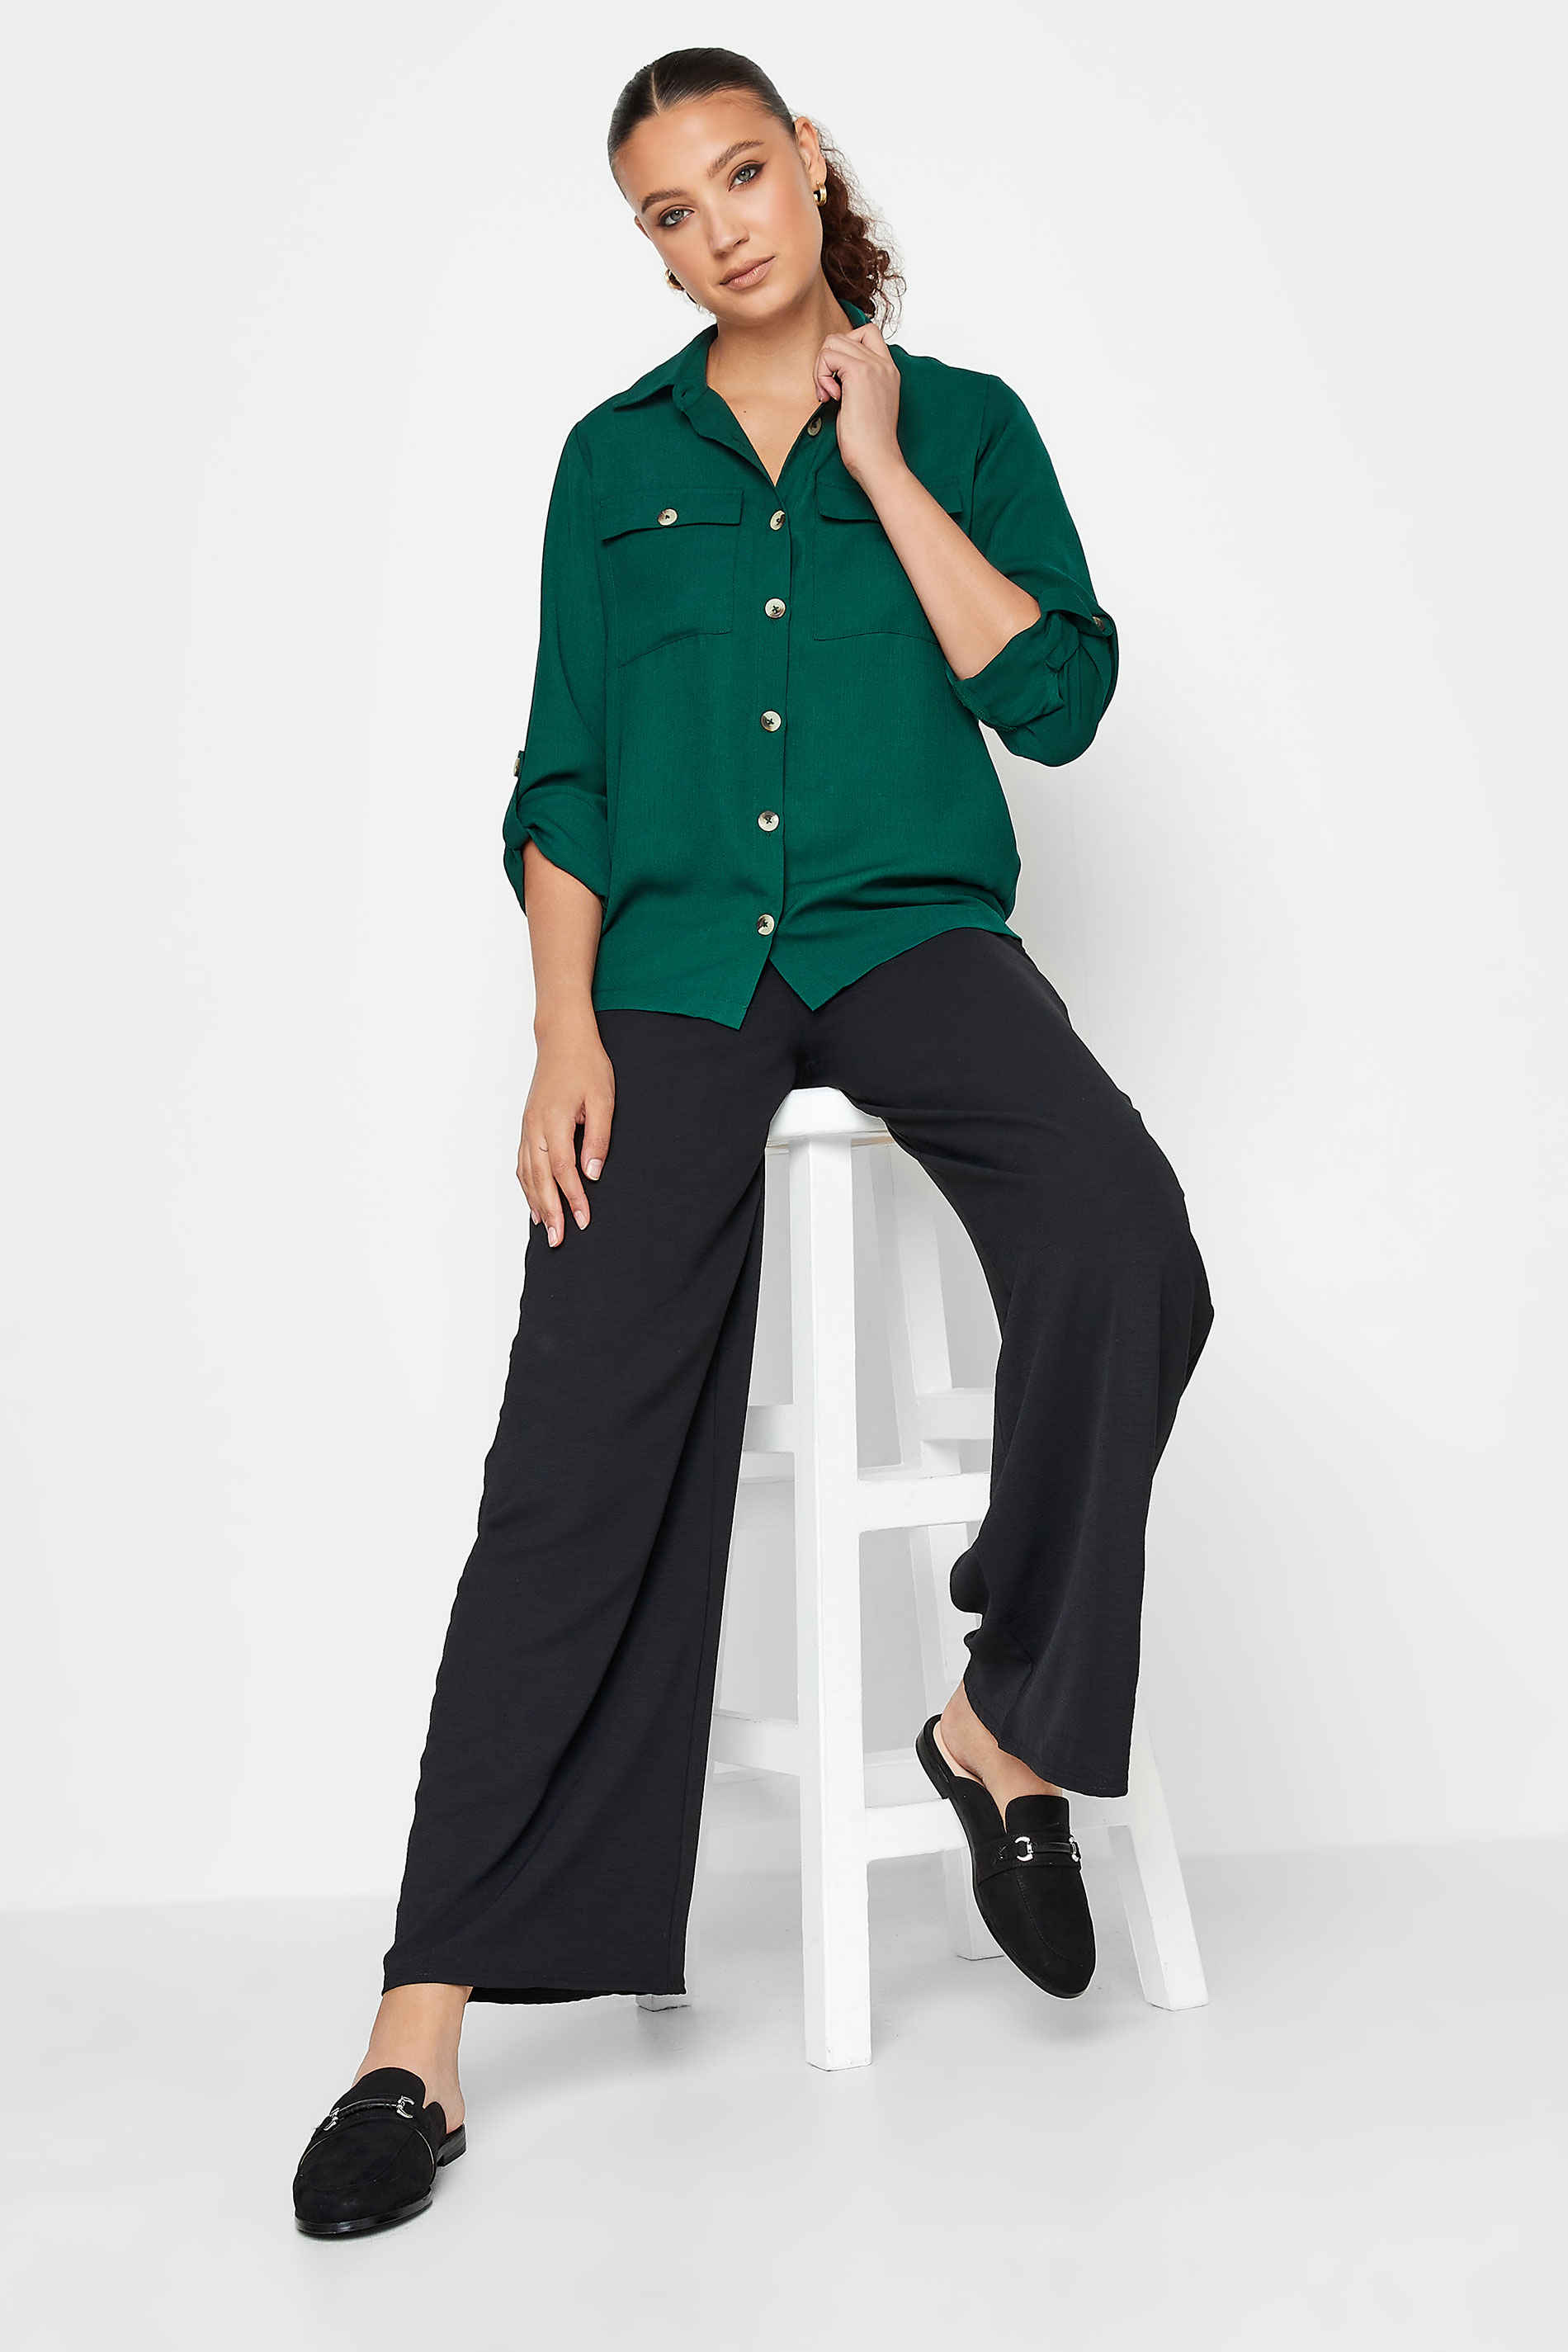 LTS Tall Green Long Sleeve Utility Shirt | Long Tall Sally 2